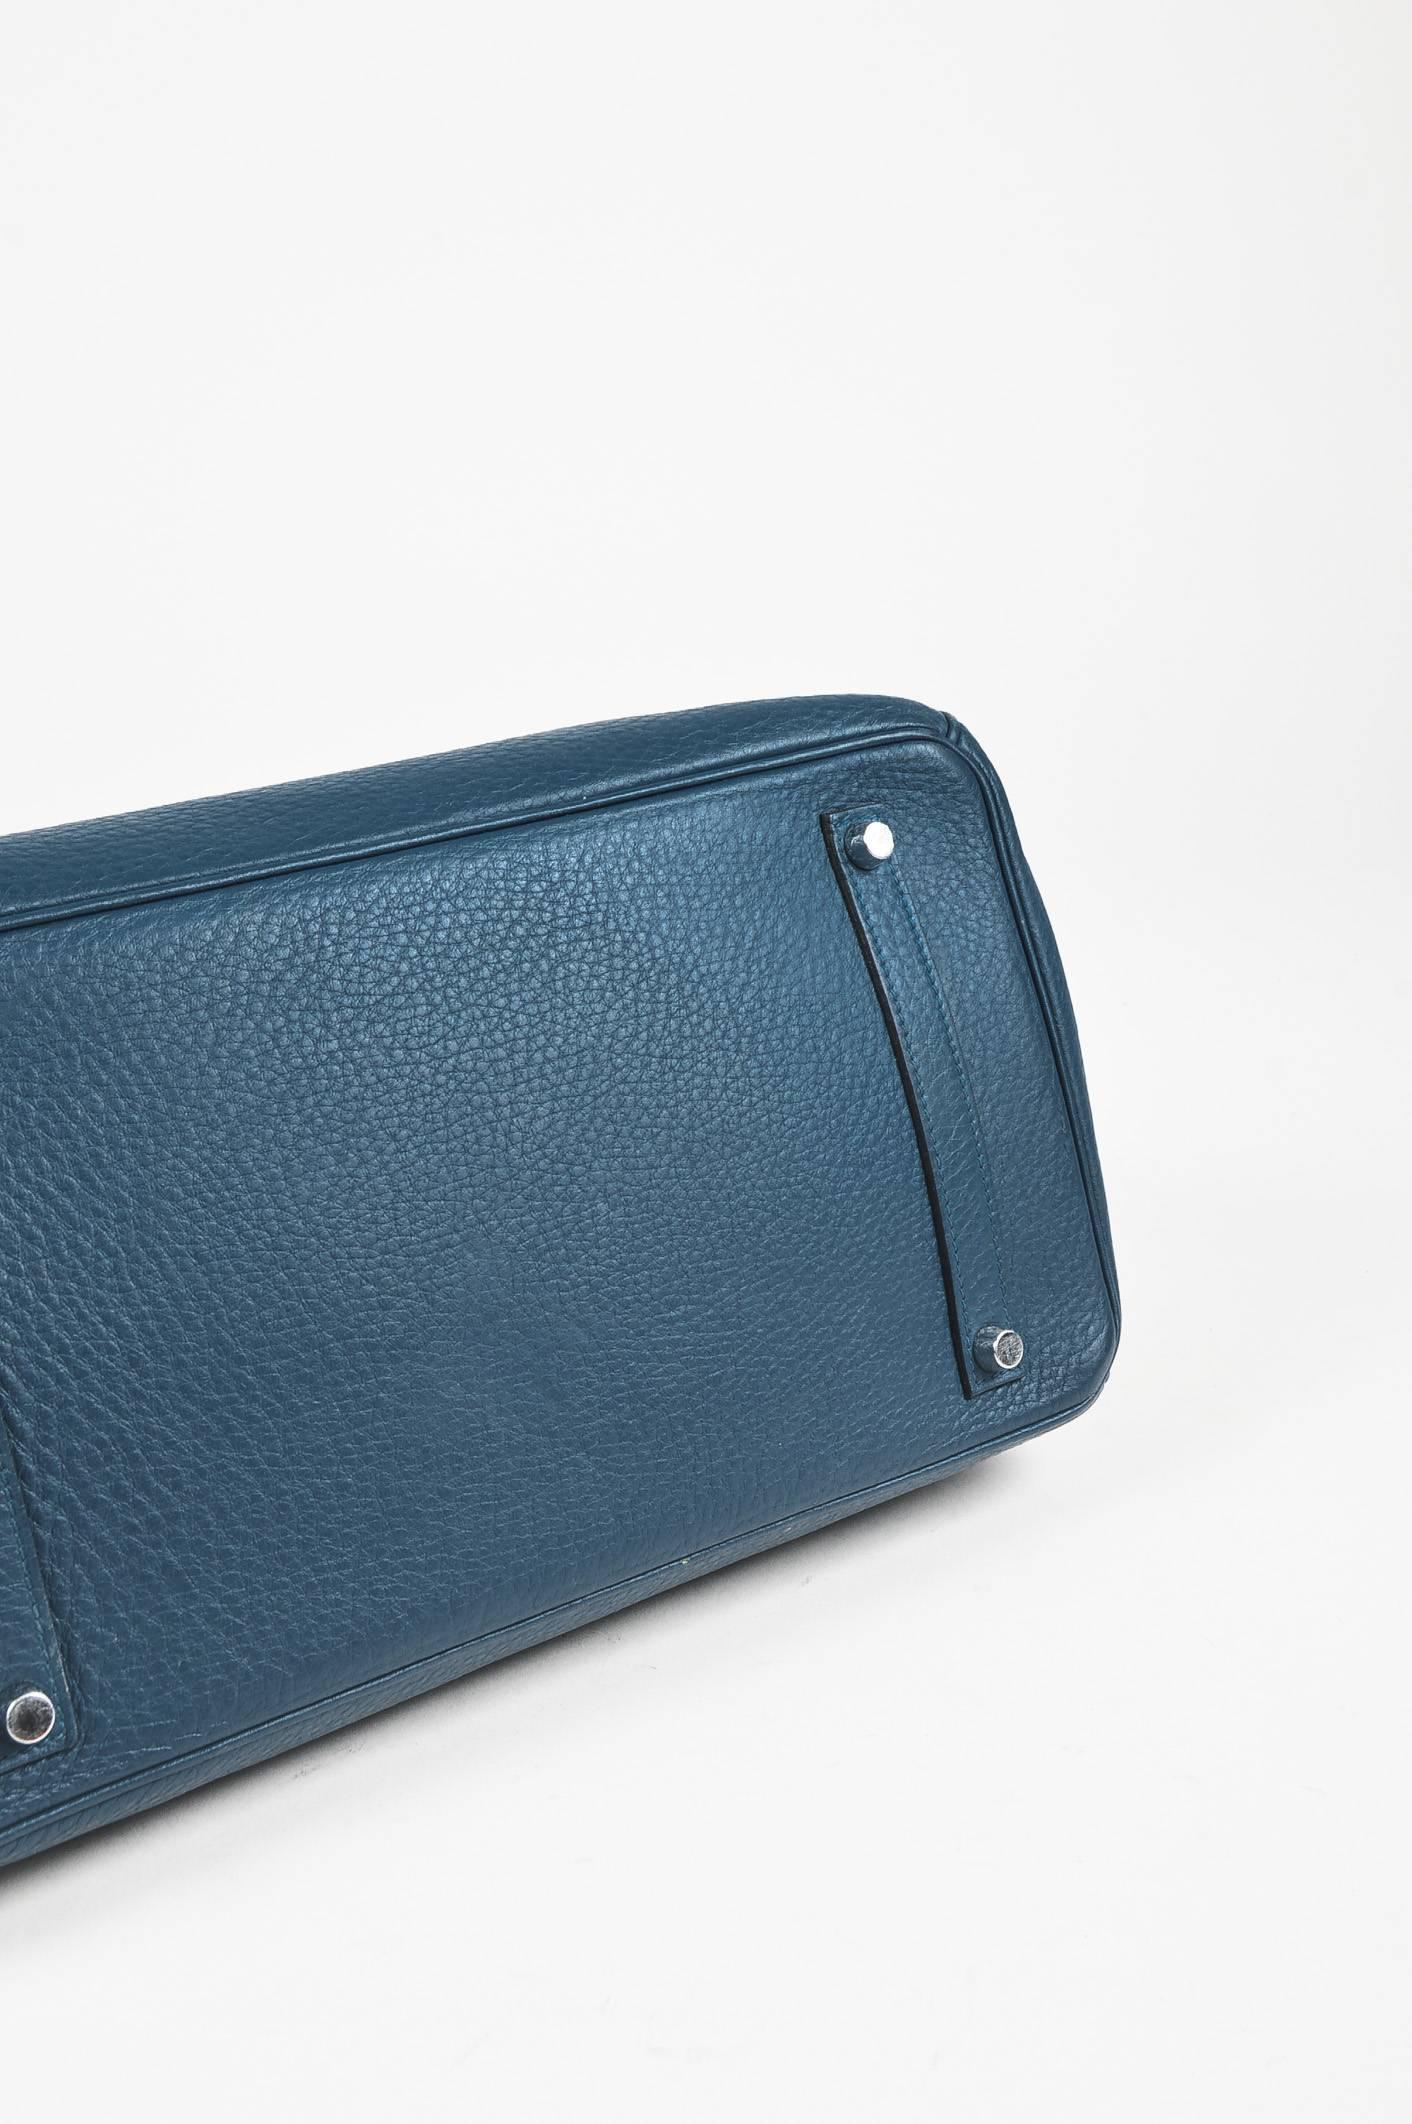 Blue Hermes Bleu Thalassa Clemence Leather Birkin 35 cm Bag For Sale